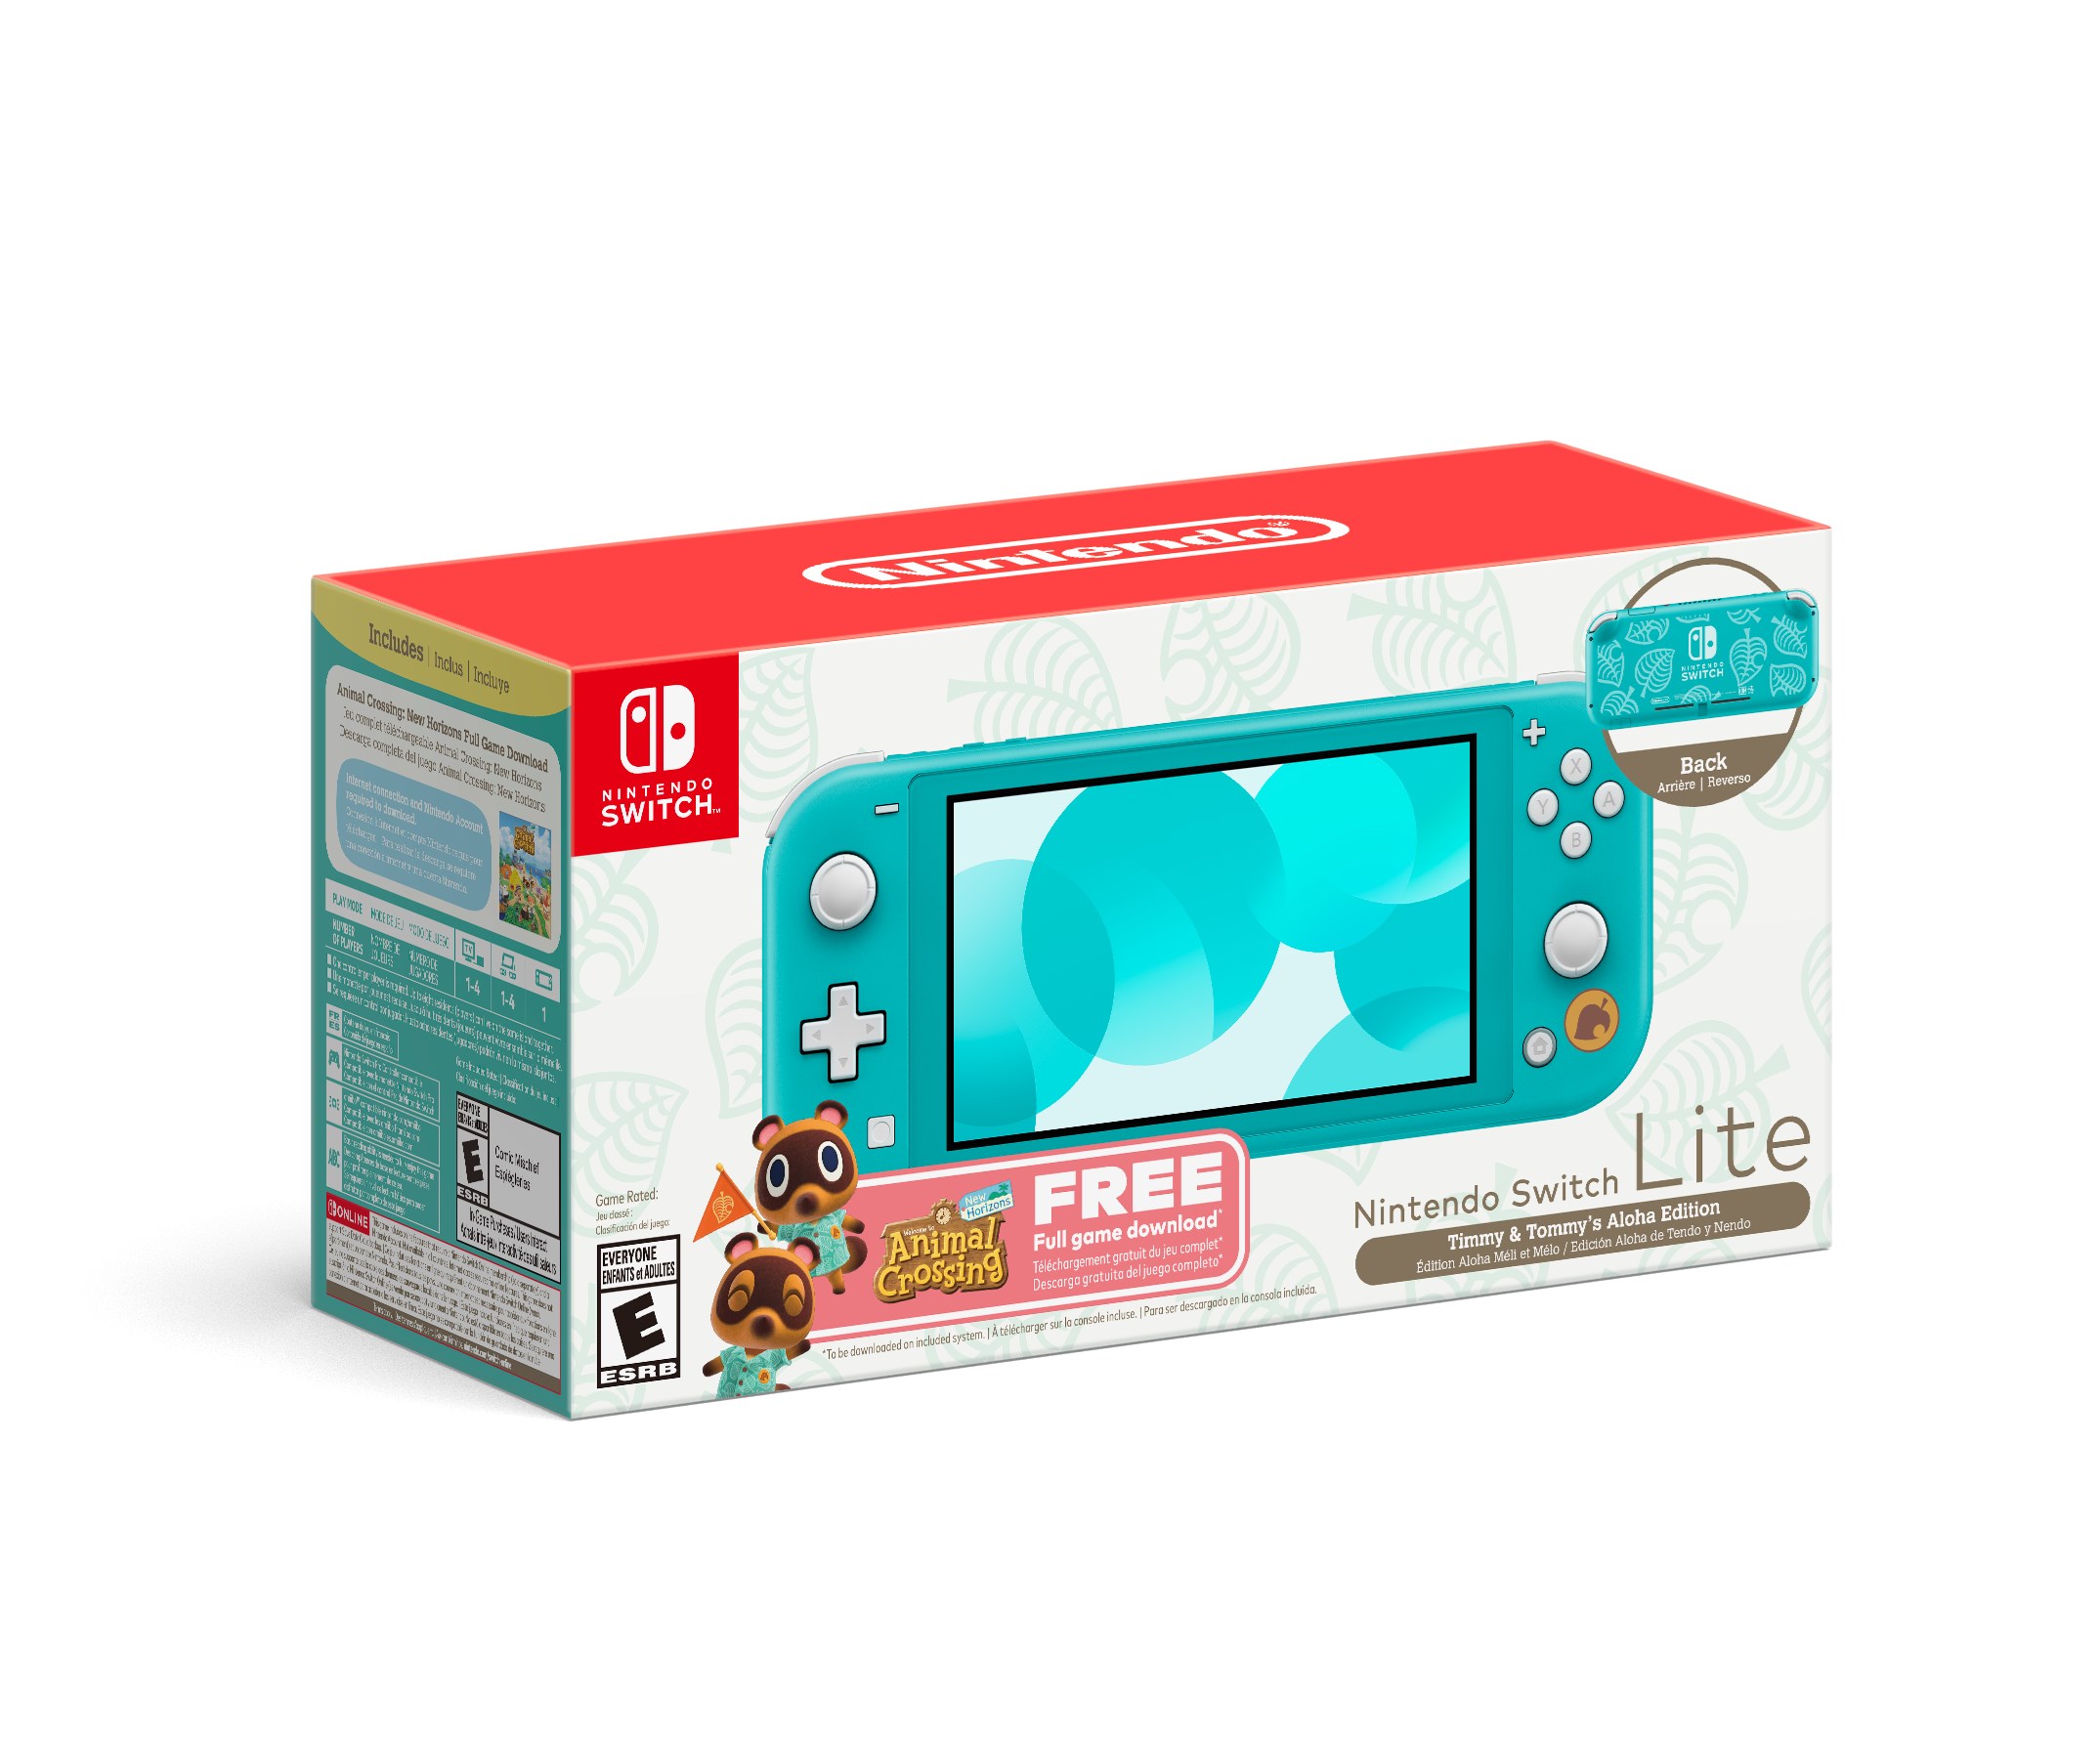 Nintendo's new Switch console bundles are now av ...